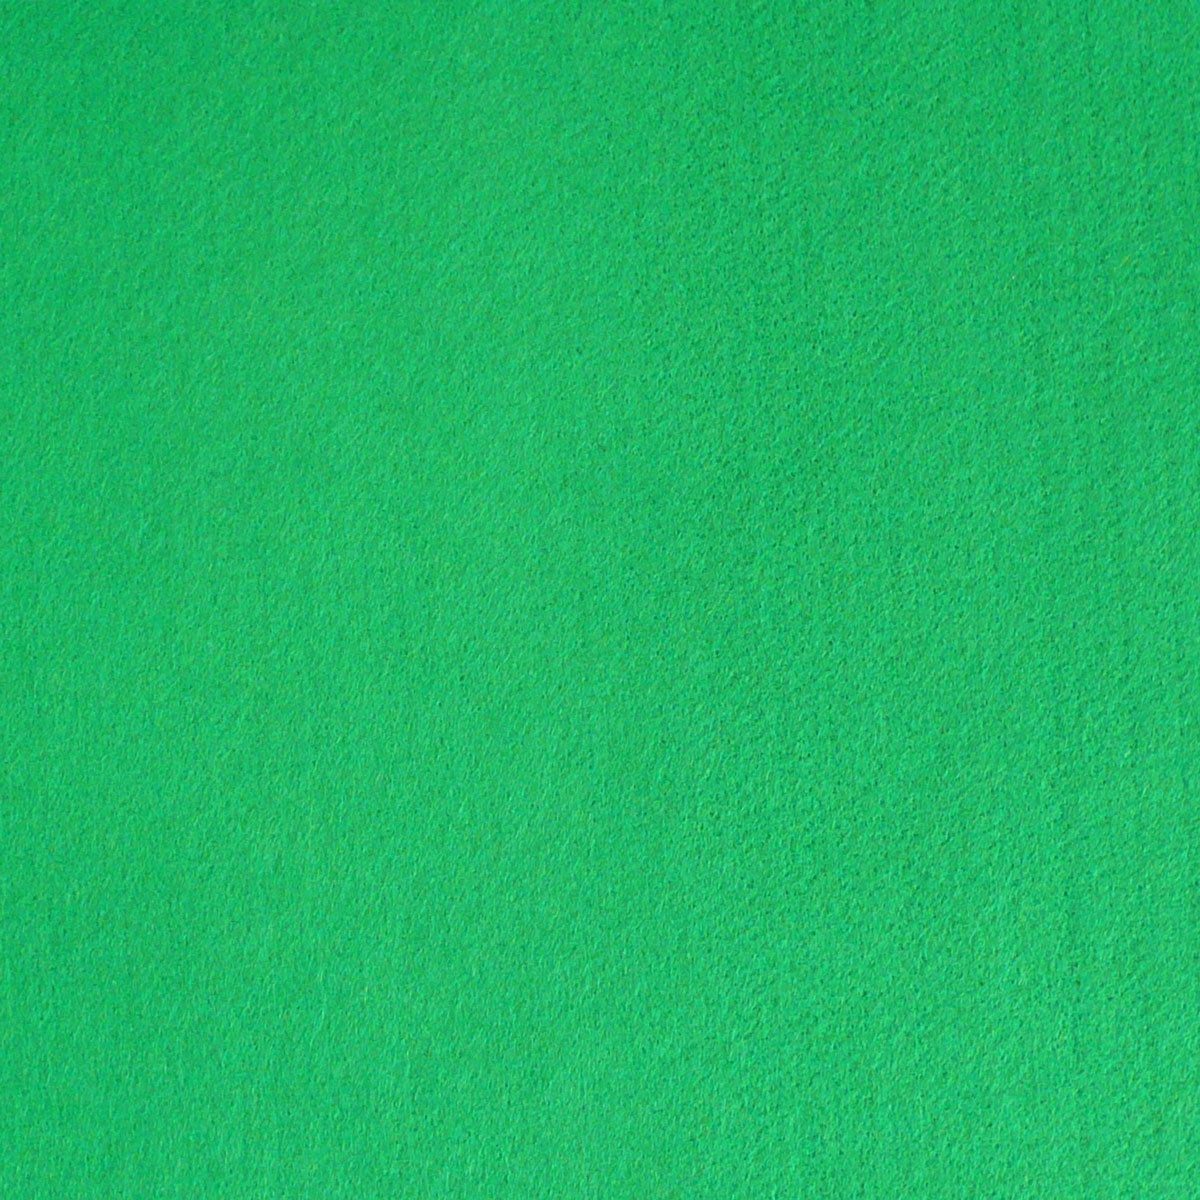 SCHÖNER LEBEN. Stoff Kreativstoff Filz einfarbig grasgrün 180cm Breite 2mm Stärke